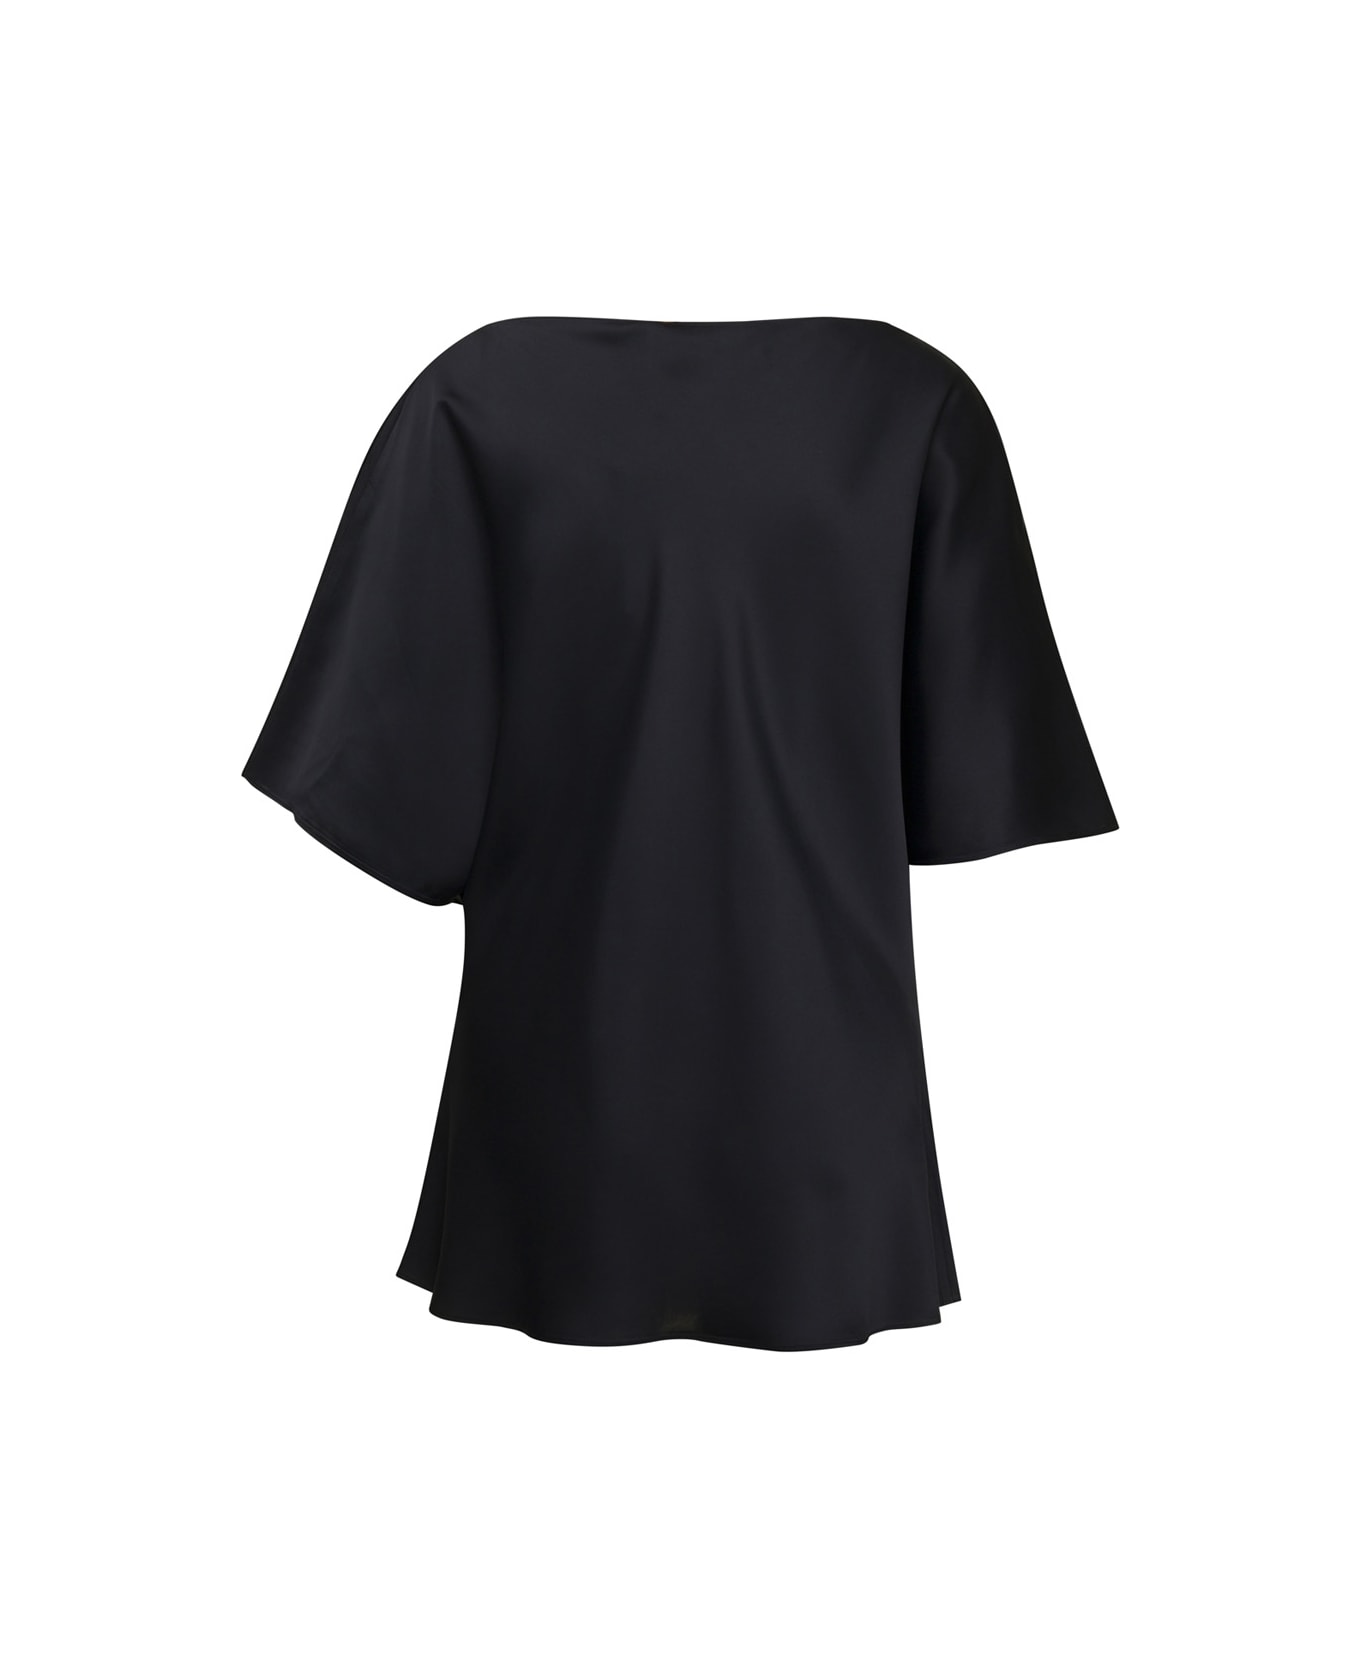 Róhe Black Shirt With Boat Neckline In Viscose Woman - Black